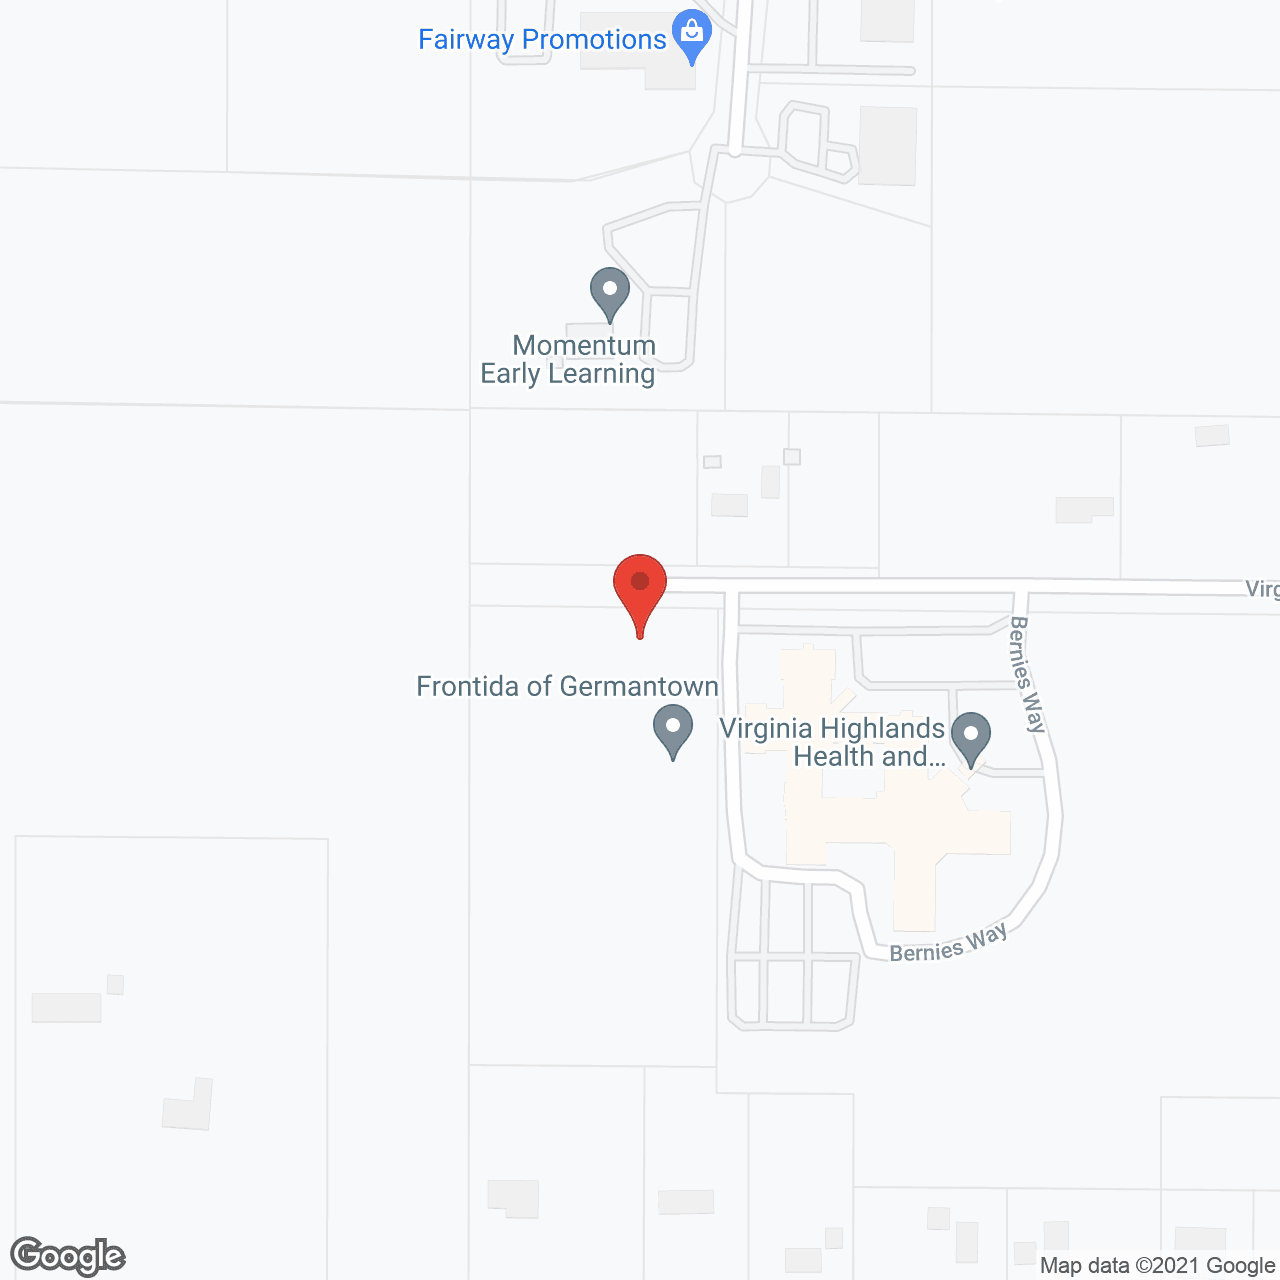 Frontida of Germantown in google map